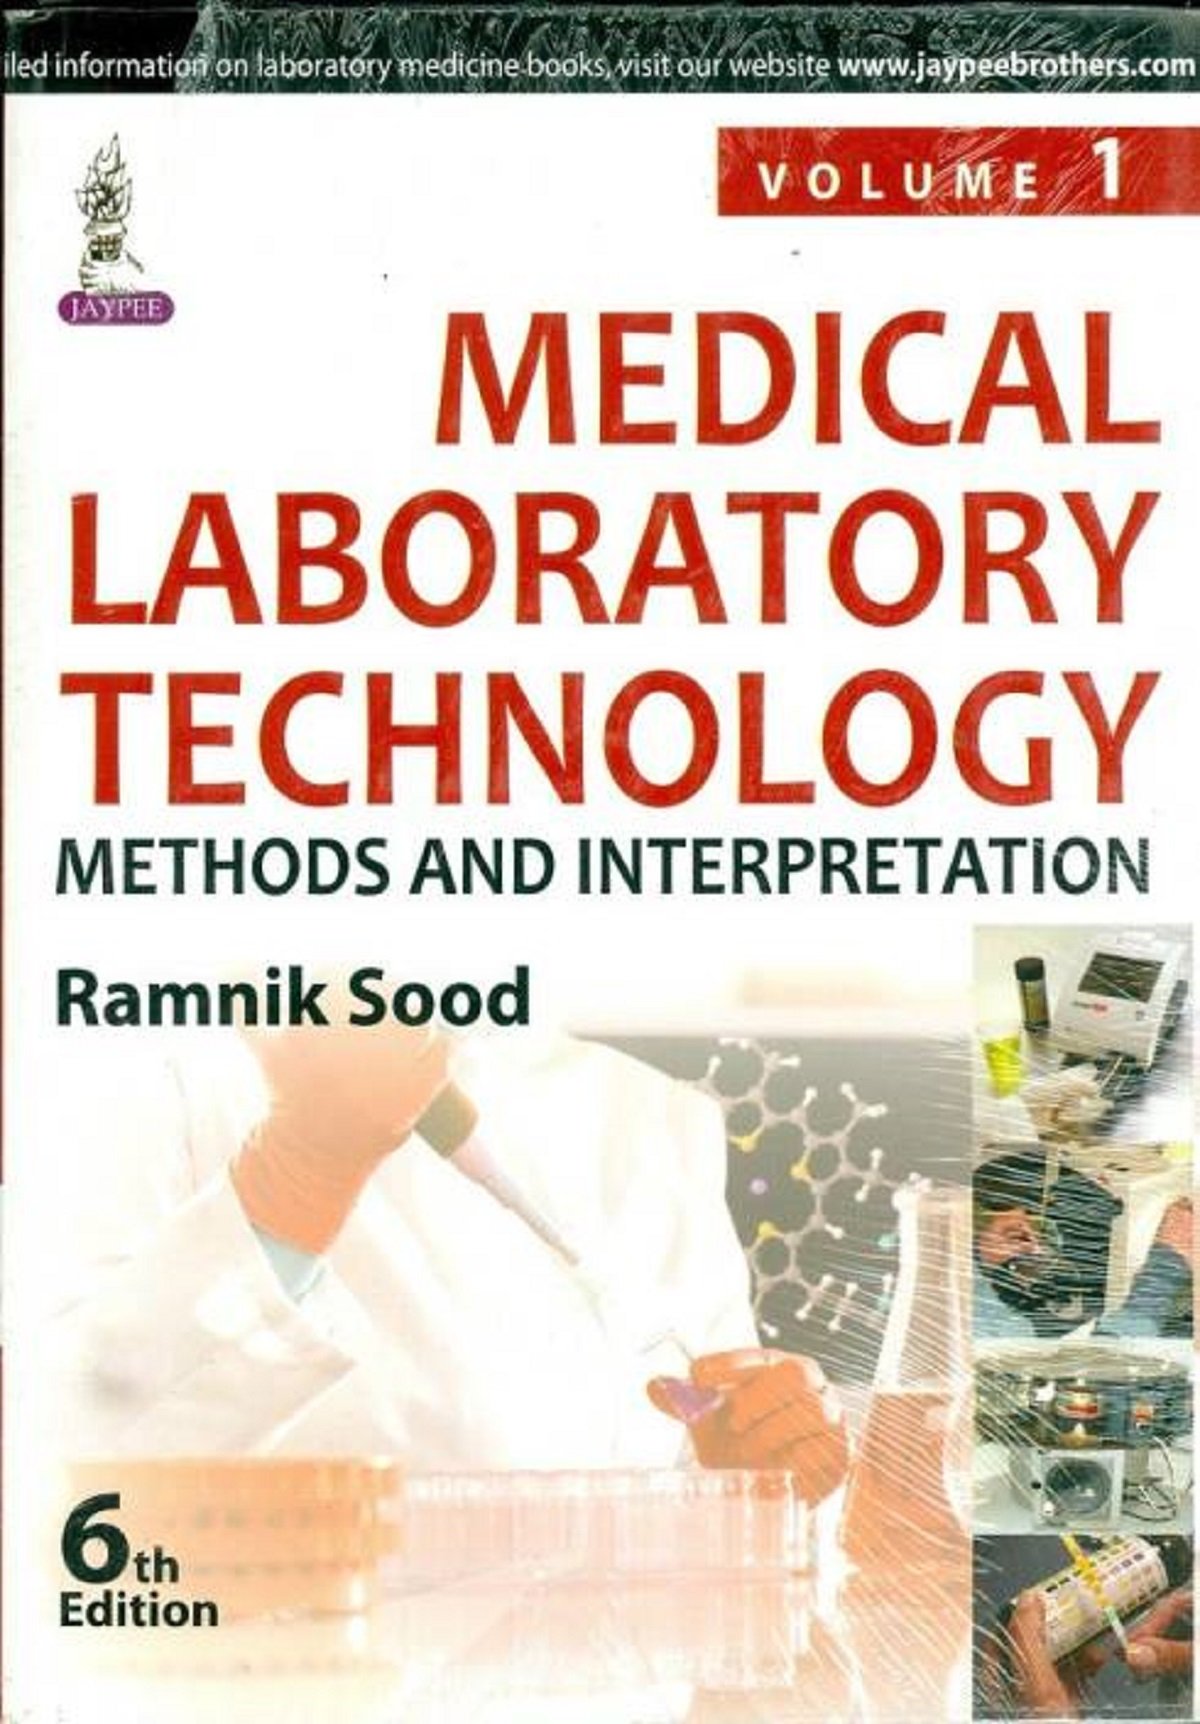 Medical Laboratory Technology (2Vols) Methods And Interpretations